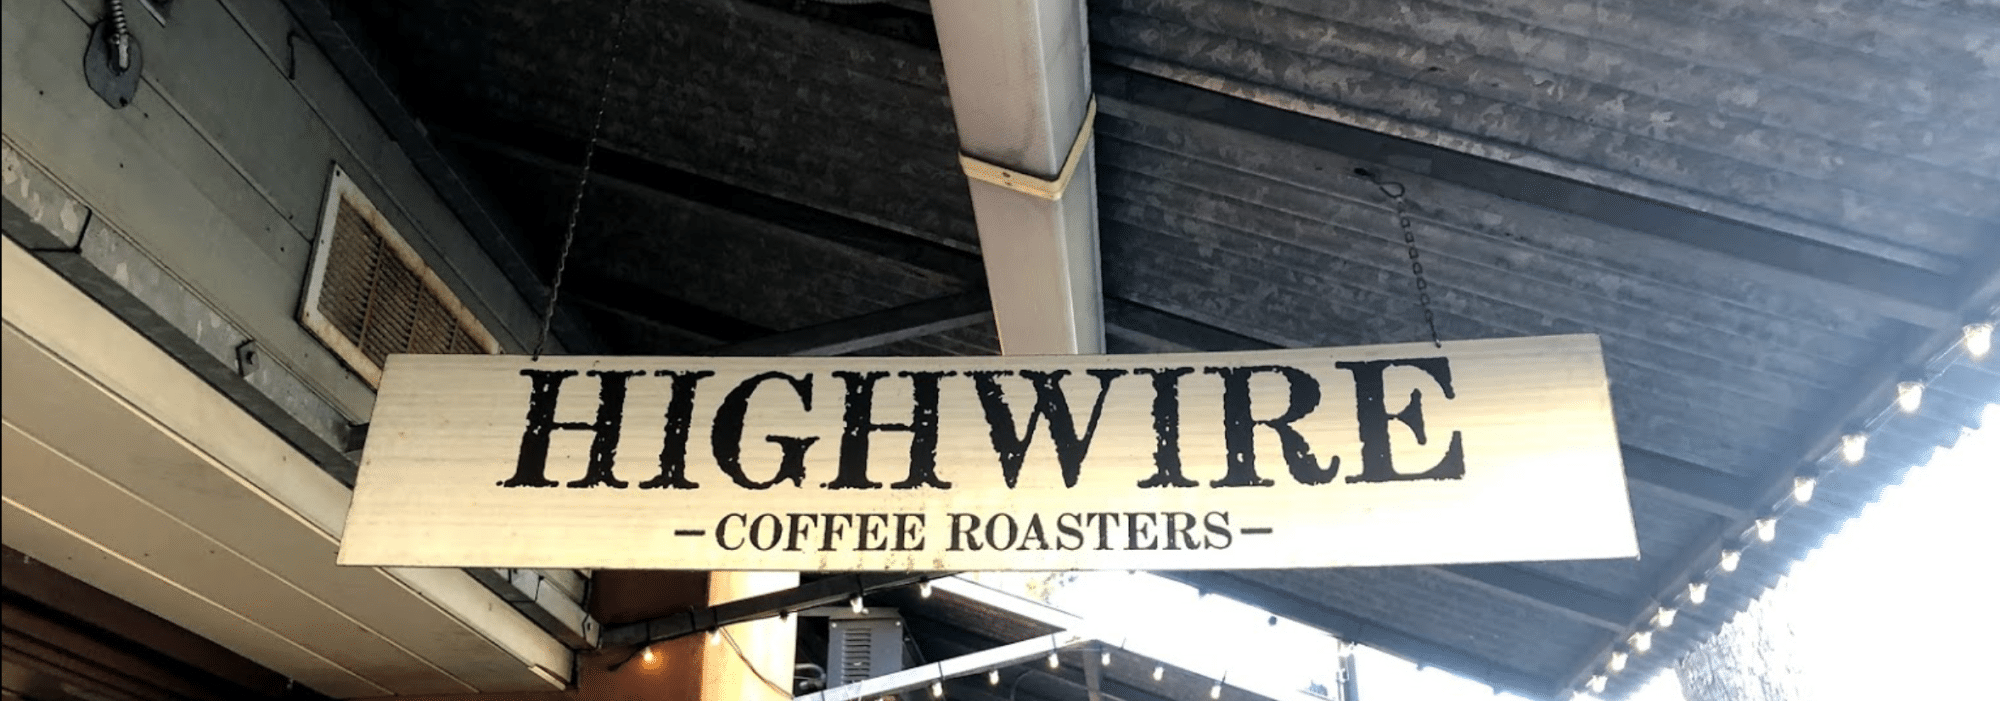 Highwire Coffee Roasters